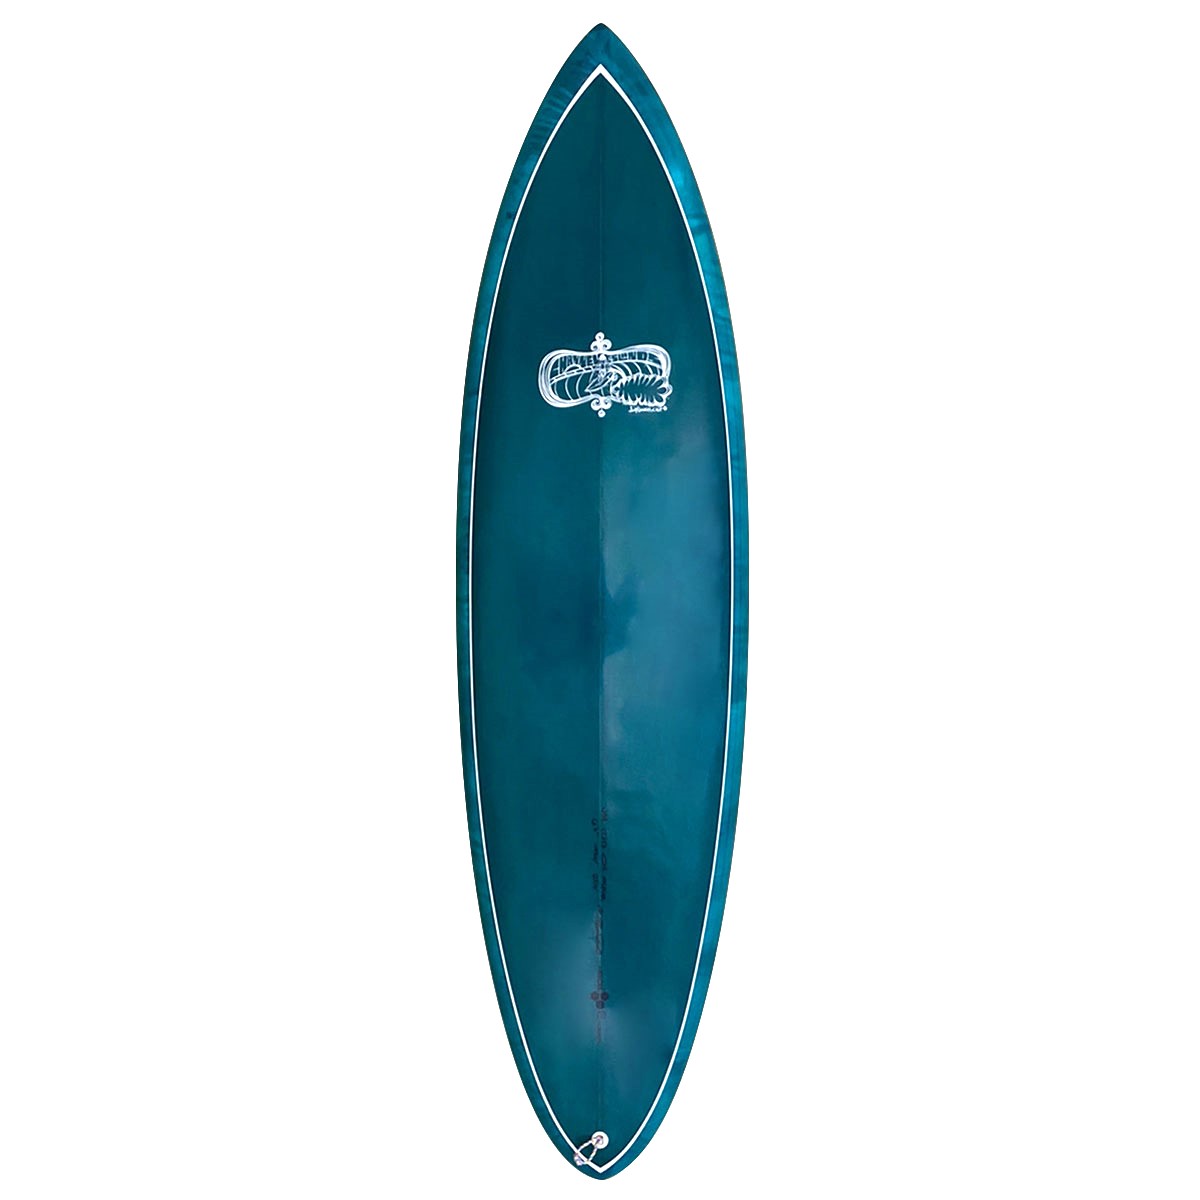 CI surfboards MSF2 6.6 シングルフィン | lahoreschoolofphotography.com